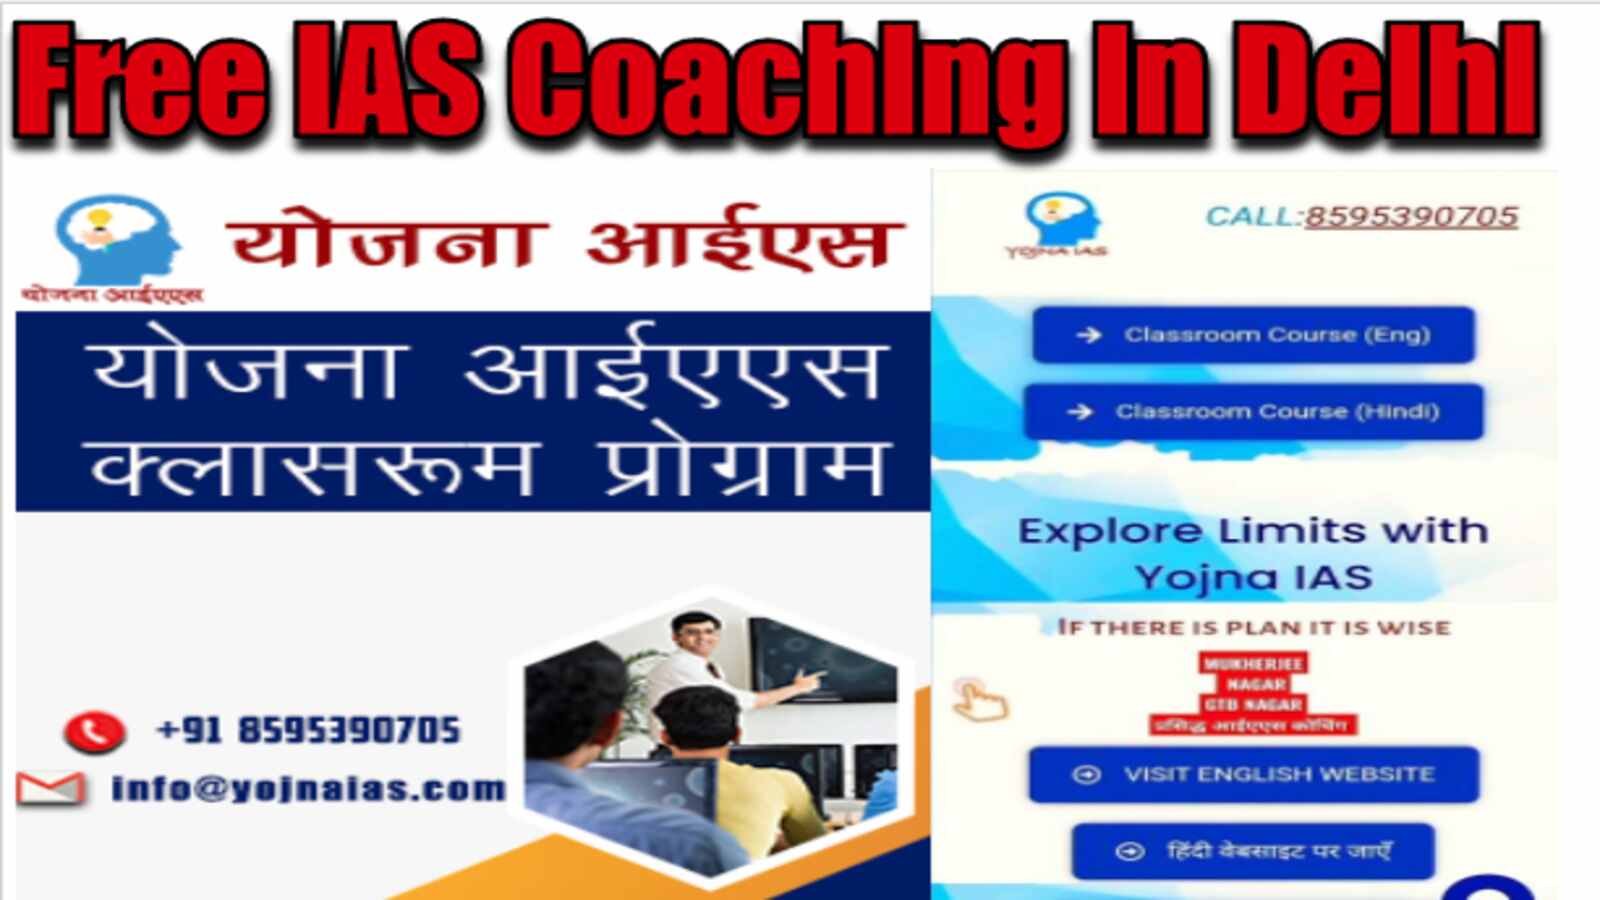 Yojna IAS free IAS Coaching in Delhi